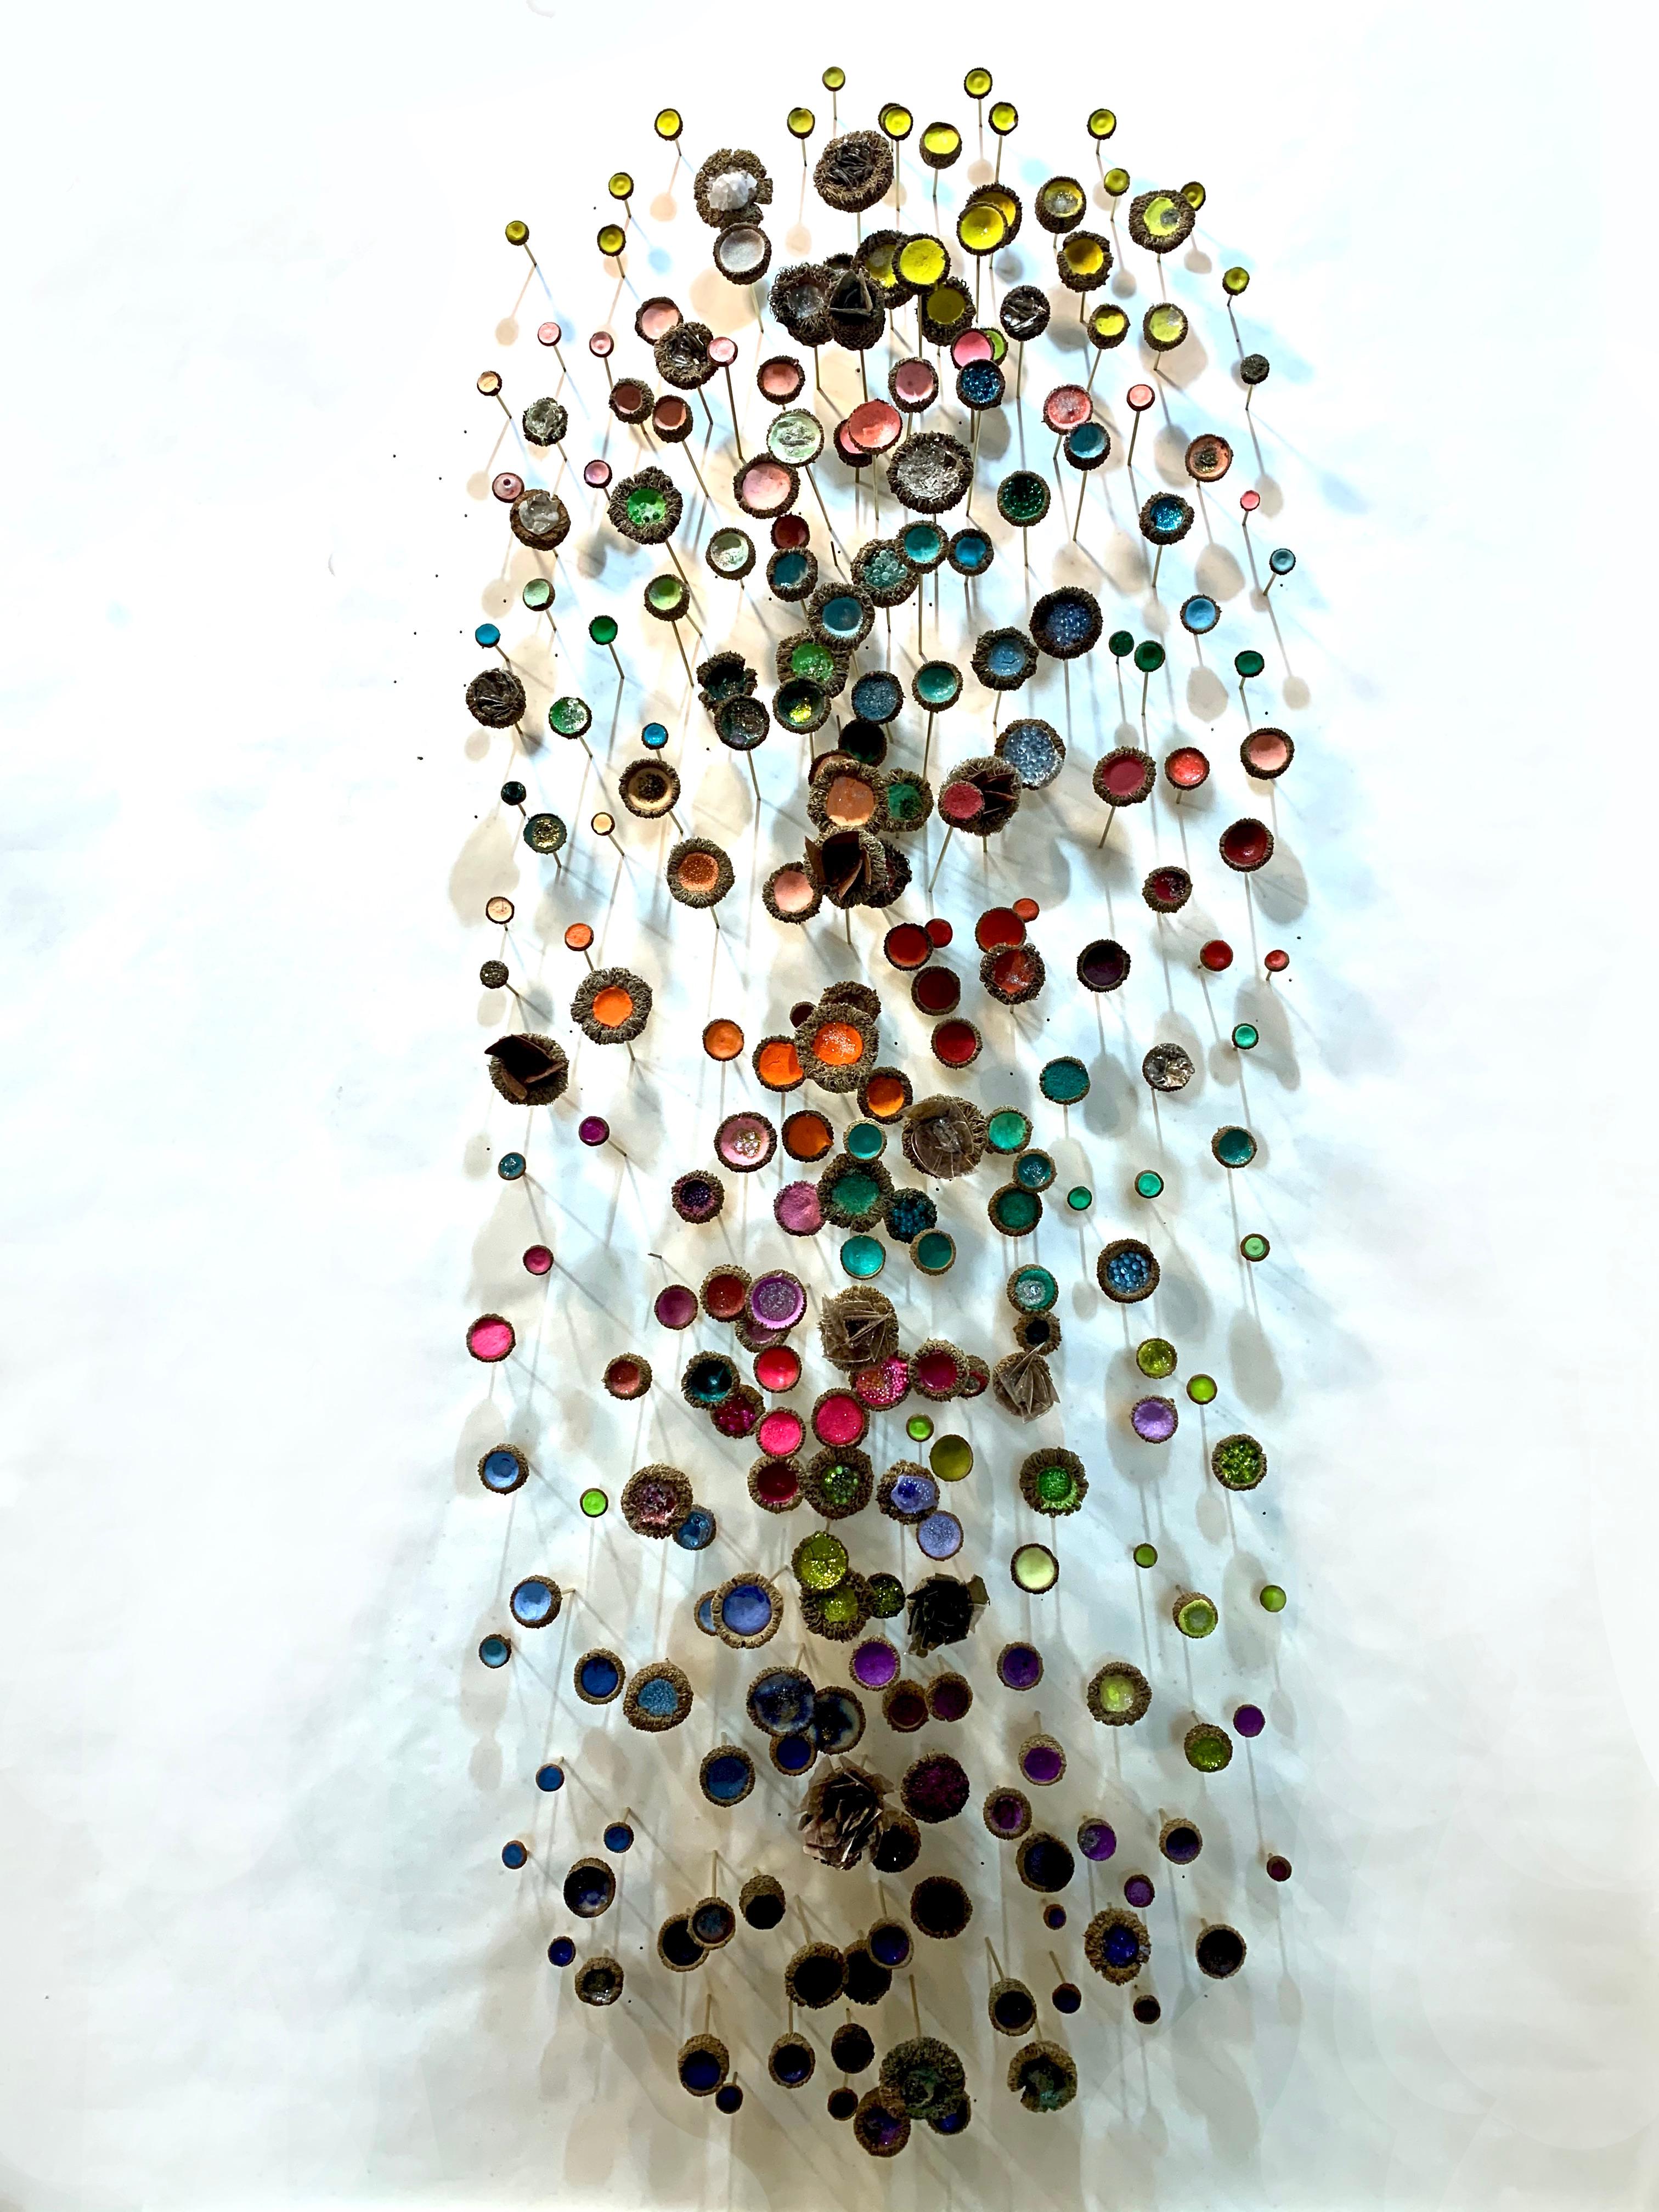 Abstract Sculpture Julie Maren - Jardin de thé,  Crystals, Acorns Multicored Mixed Media Wall Mounted Sculpture